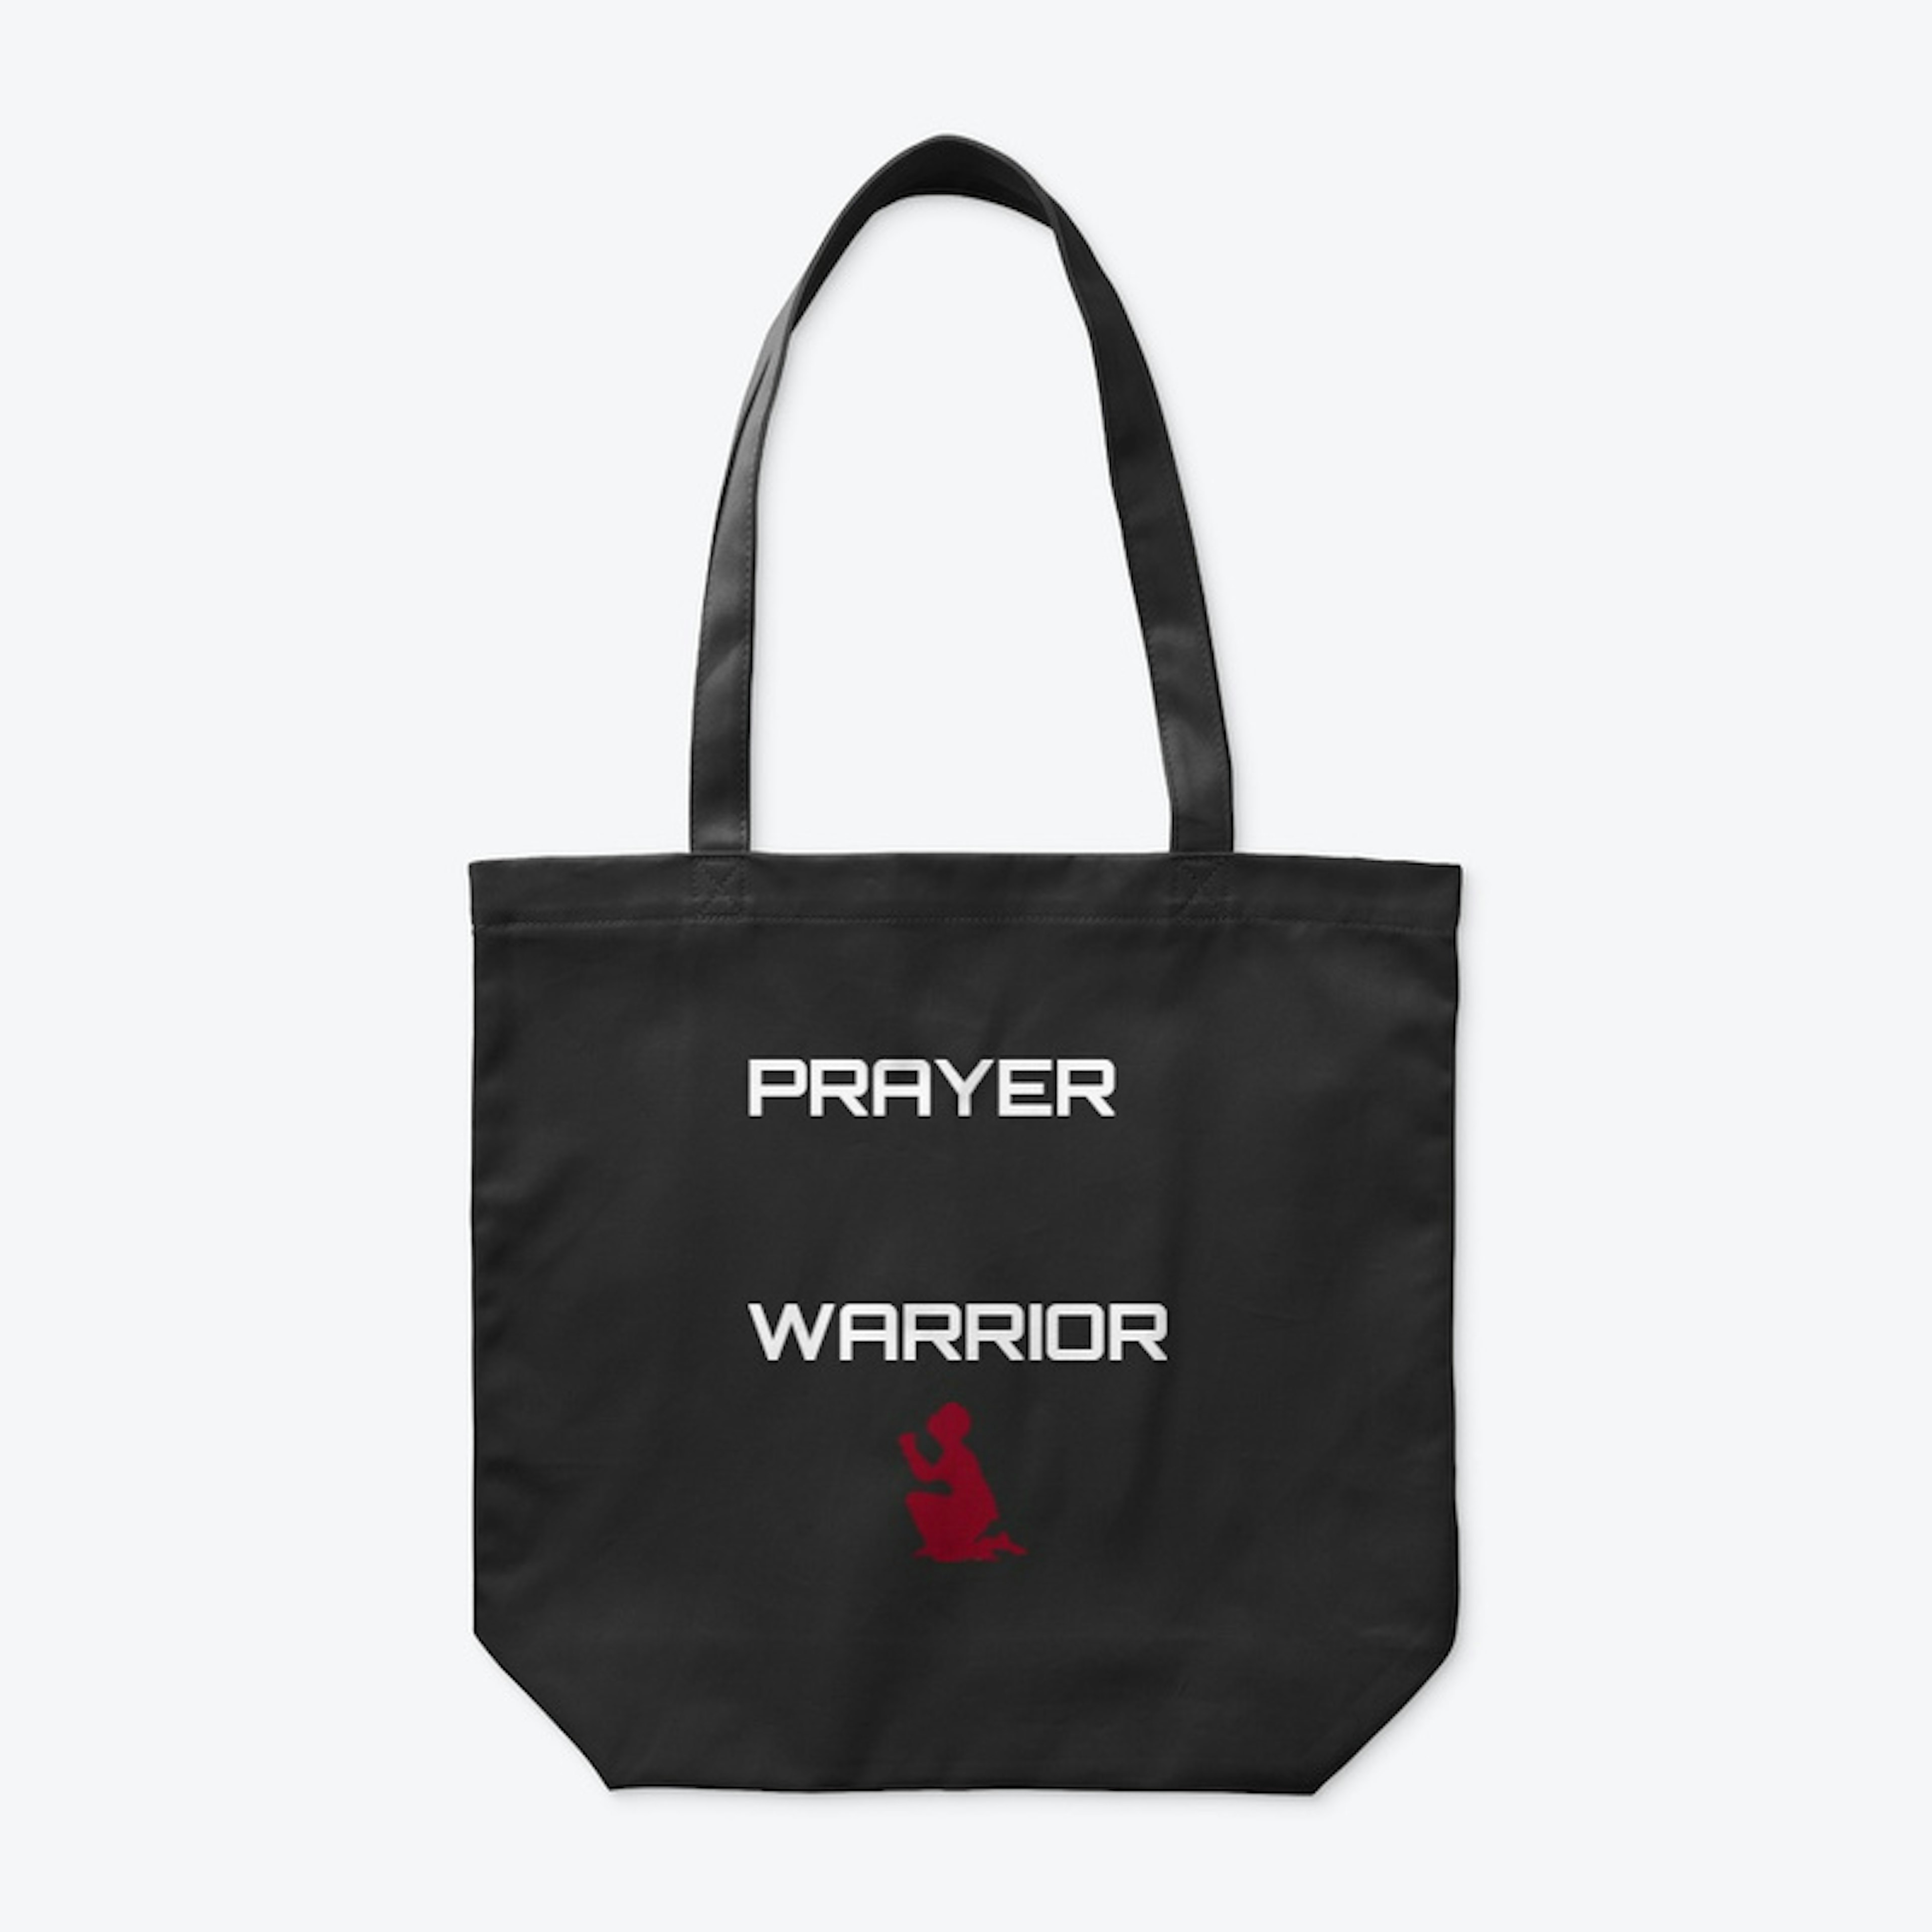 Prayer Warrior - Female Image